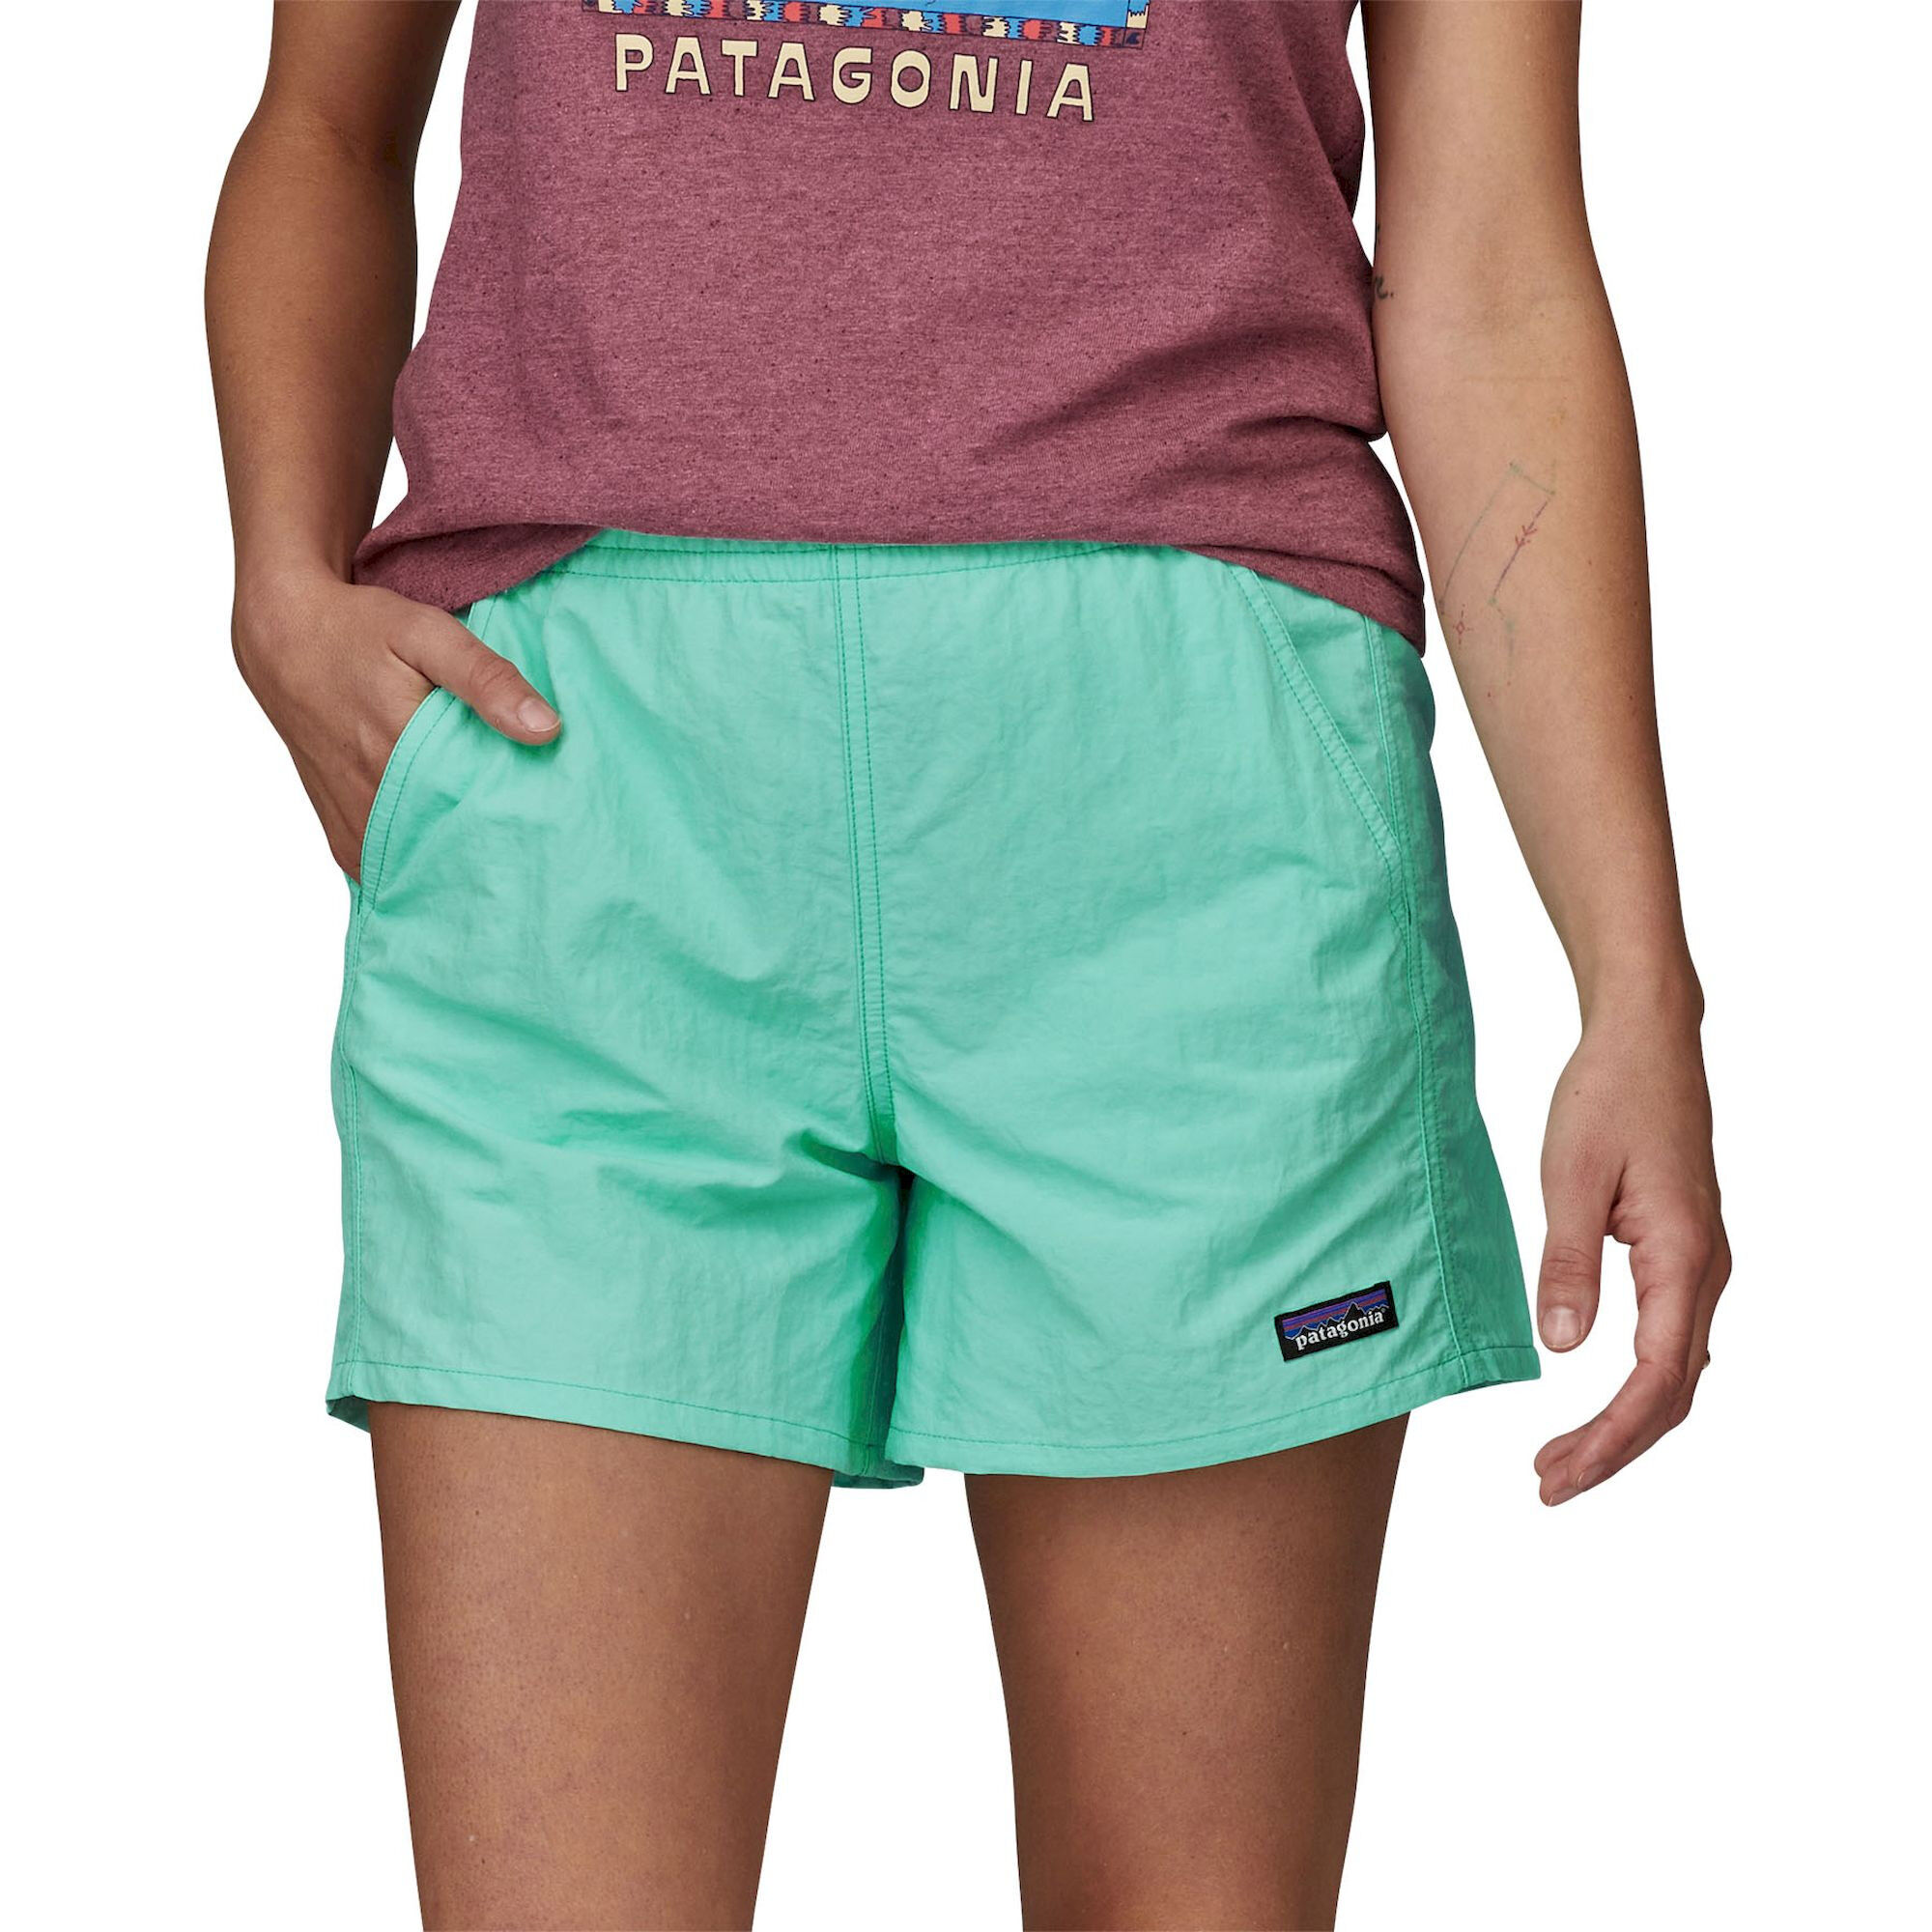 Patagonia Baggies Shorts 5 in. - Shorts - Women's